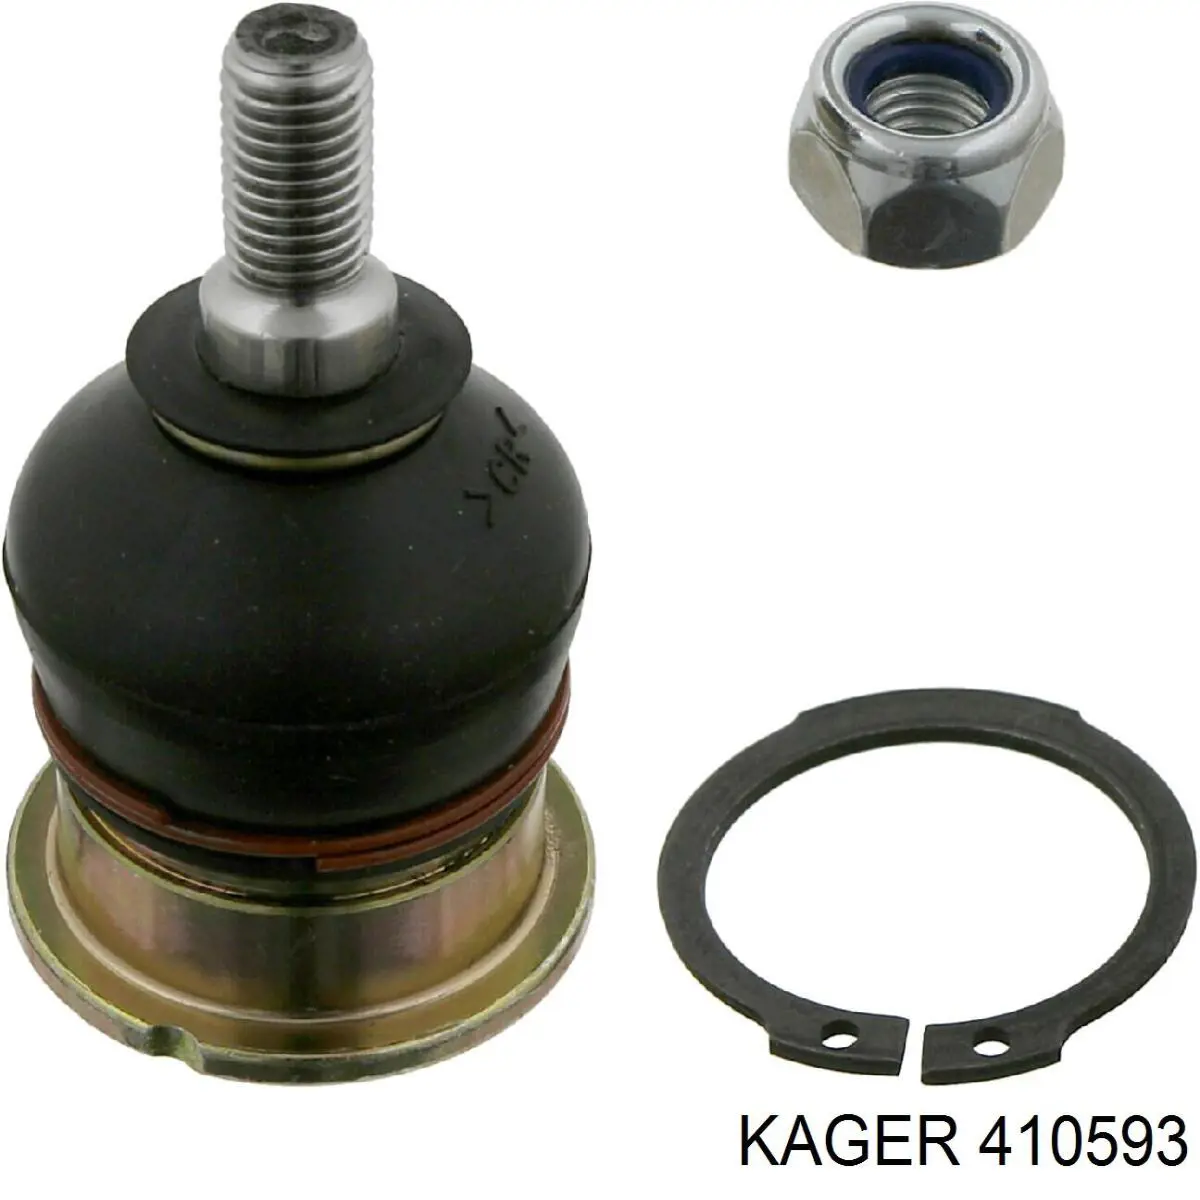 41-0593 Kager barra de acoplamiento